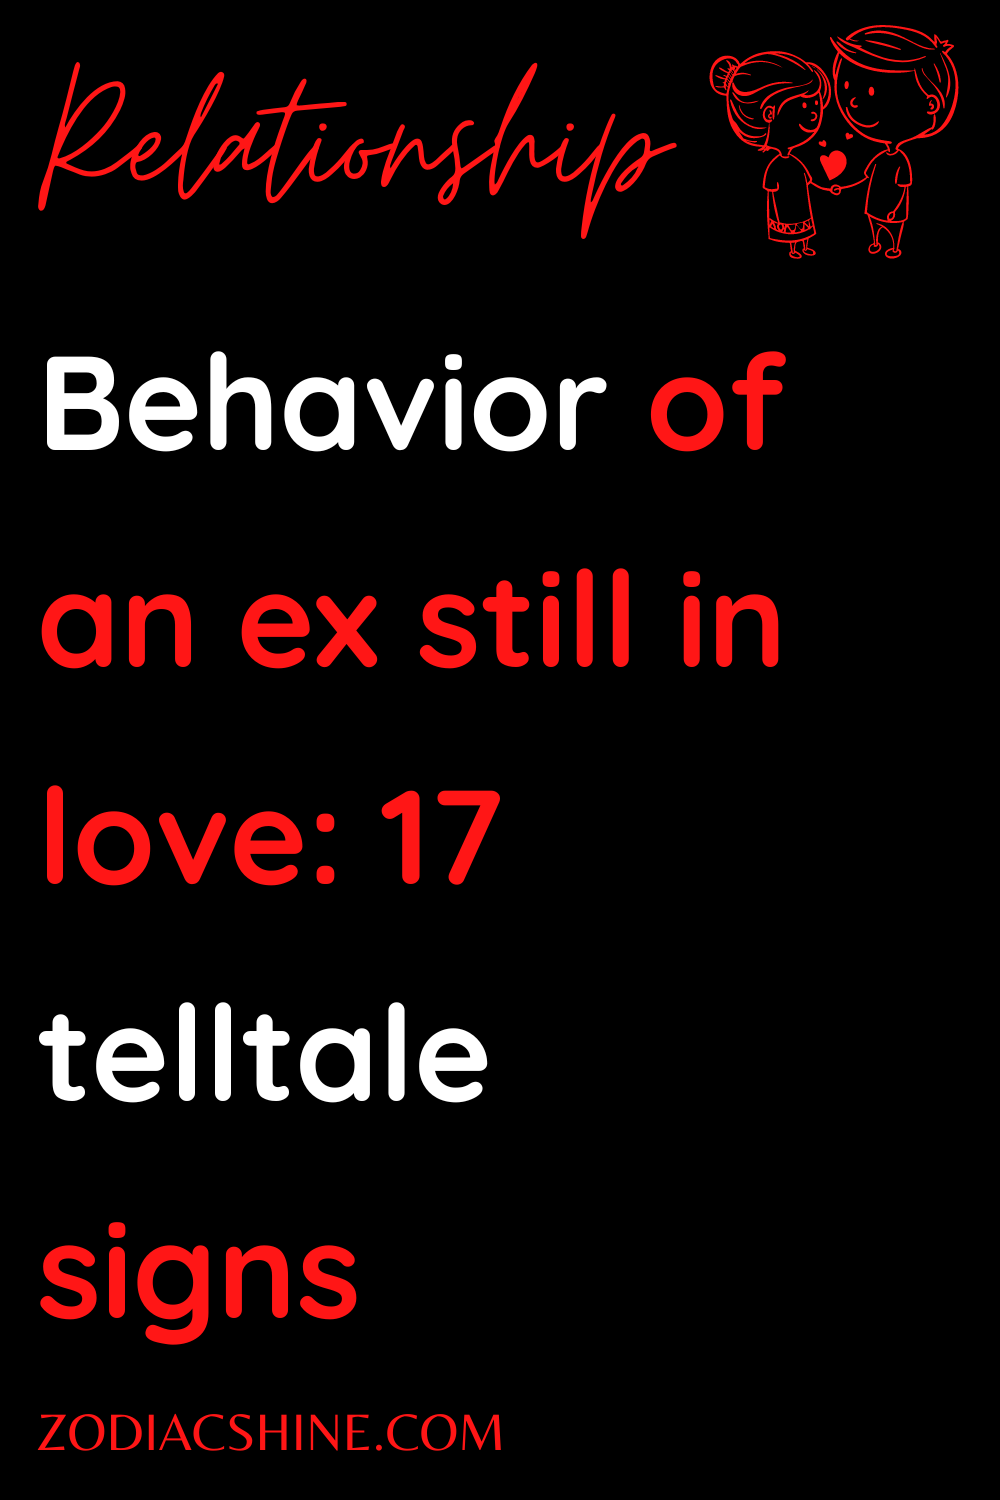 Behavior of an ex still in love: 17 telltale signs